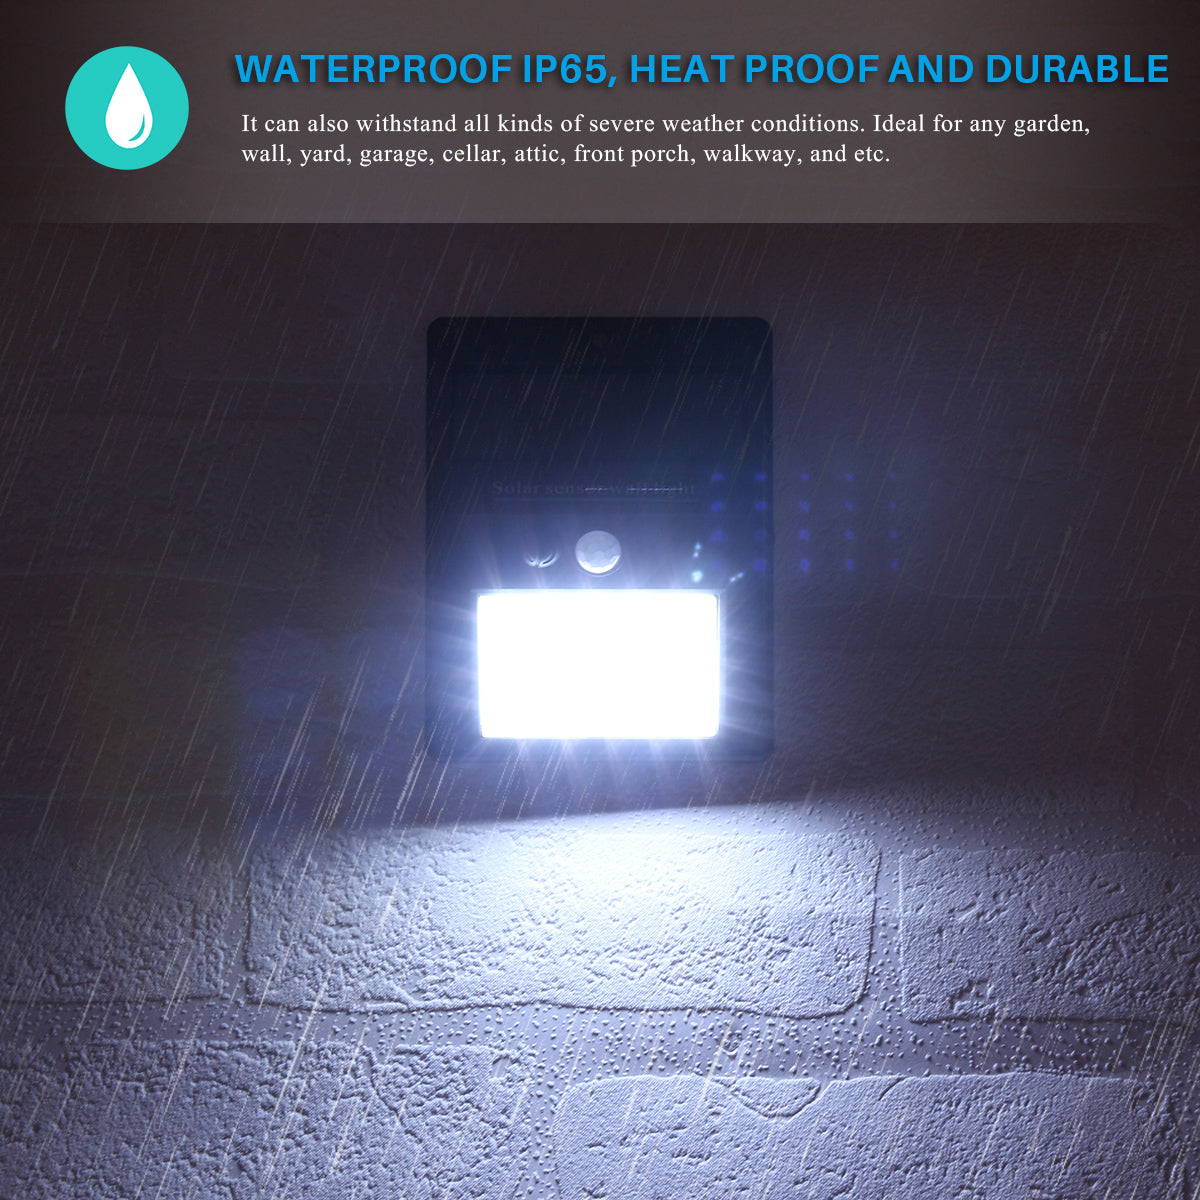 Waterproof 20 LED Solar Motion Sensor Wall Light